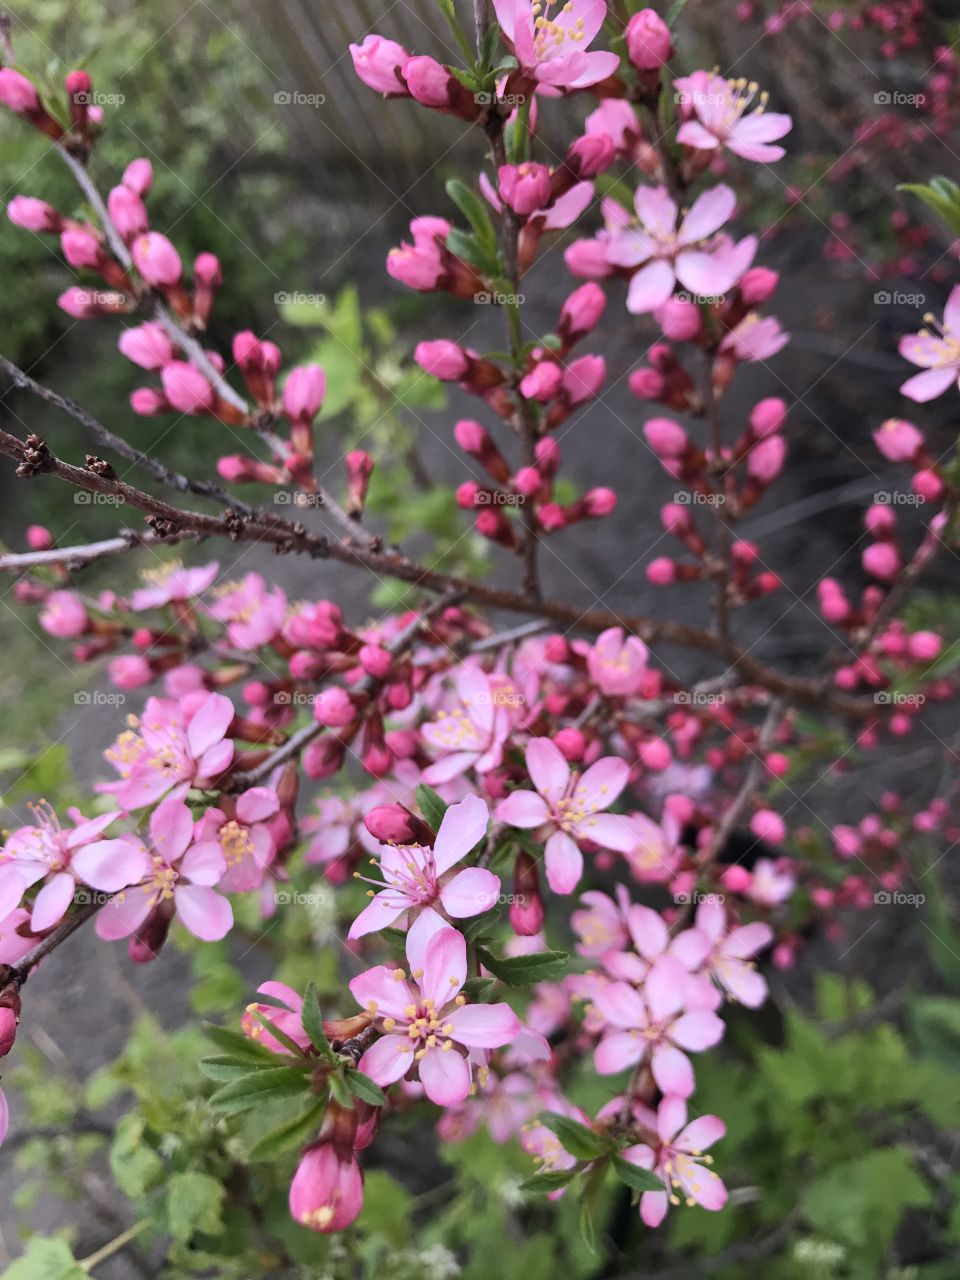 Almond tree, ornamental shrub on the site, pink delicate flowers. Миндальное дерево, декоративный кустарник на участке, розовые нежные цветки.